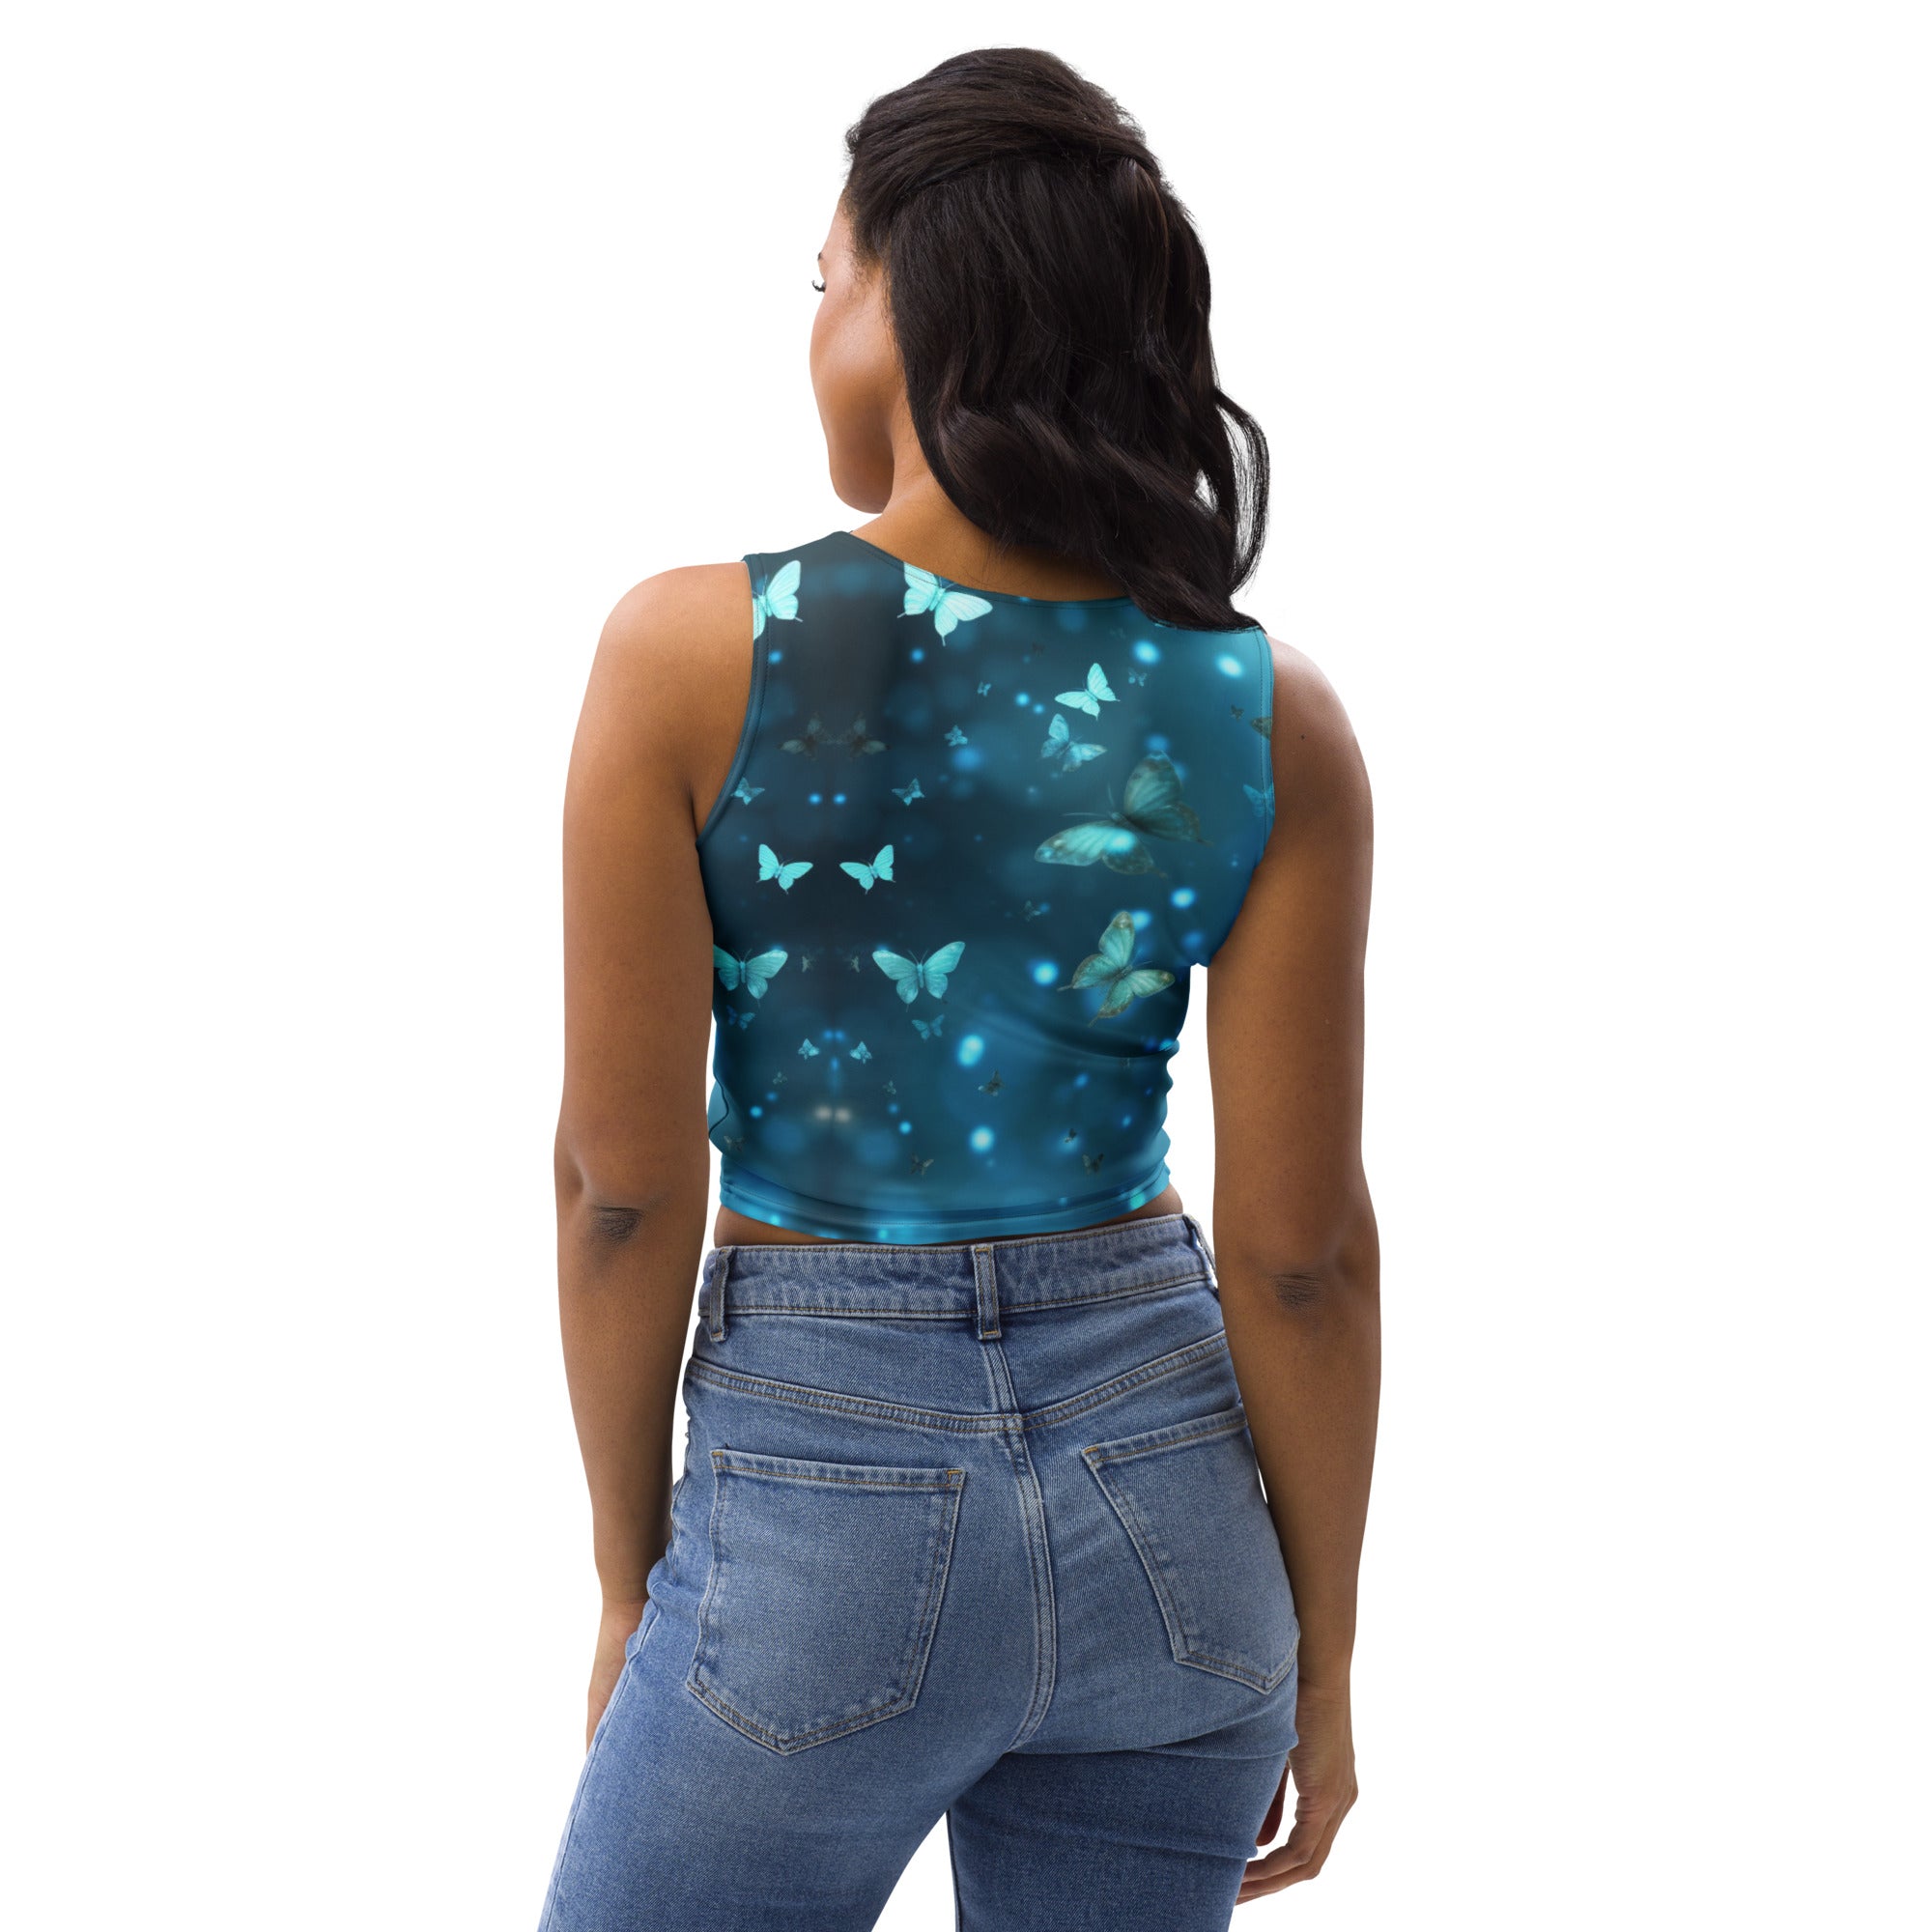 Be the Star: Shimmering Light Blue Crop Top for Goddesses